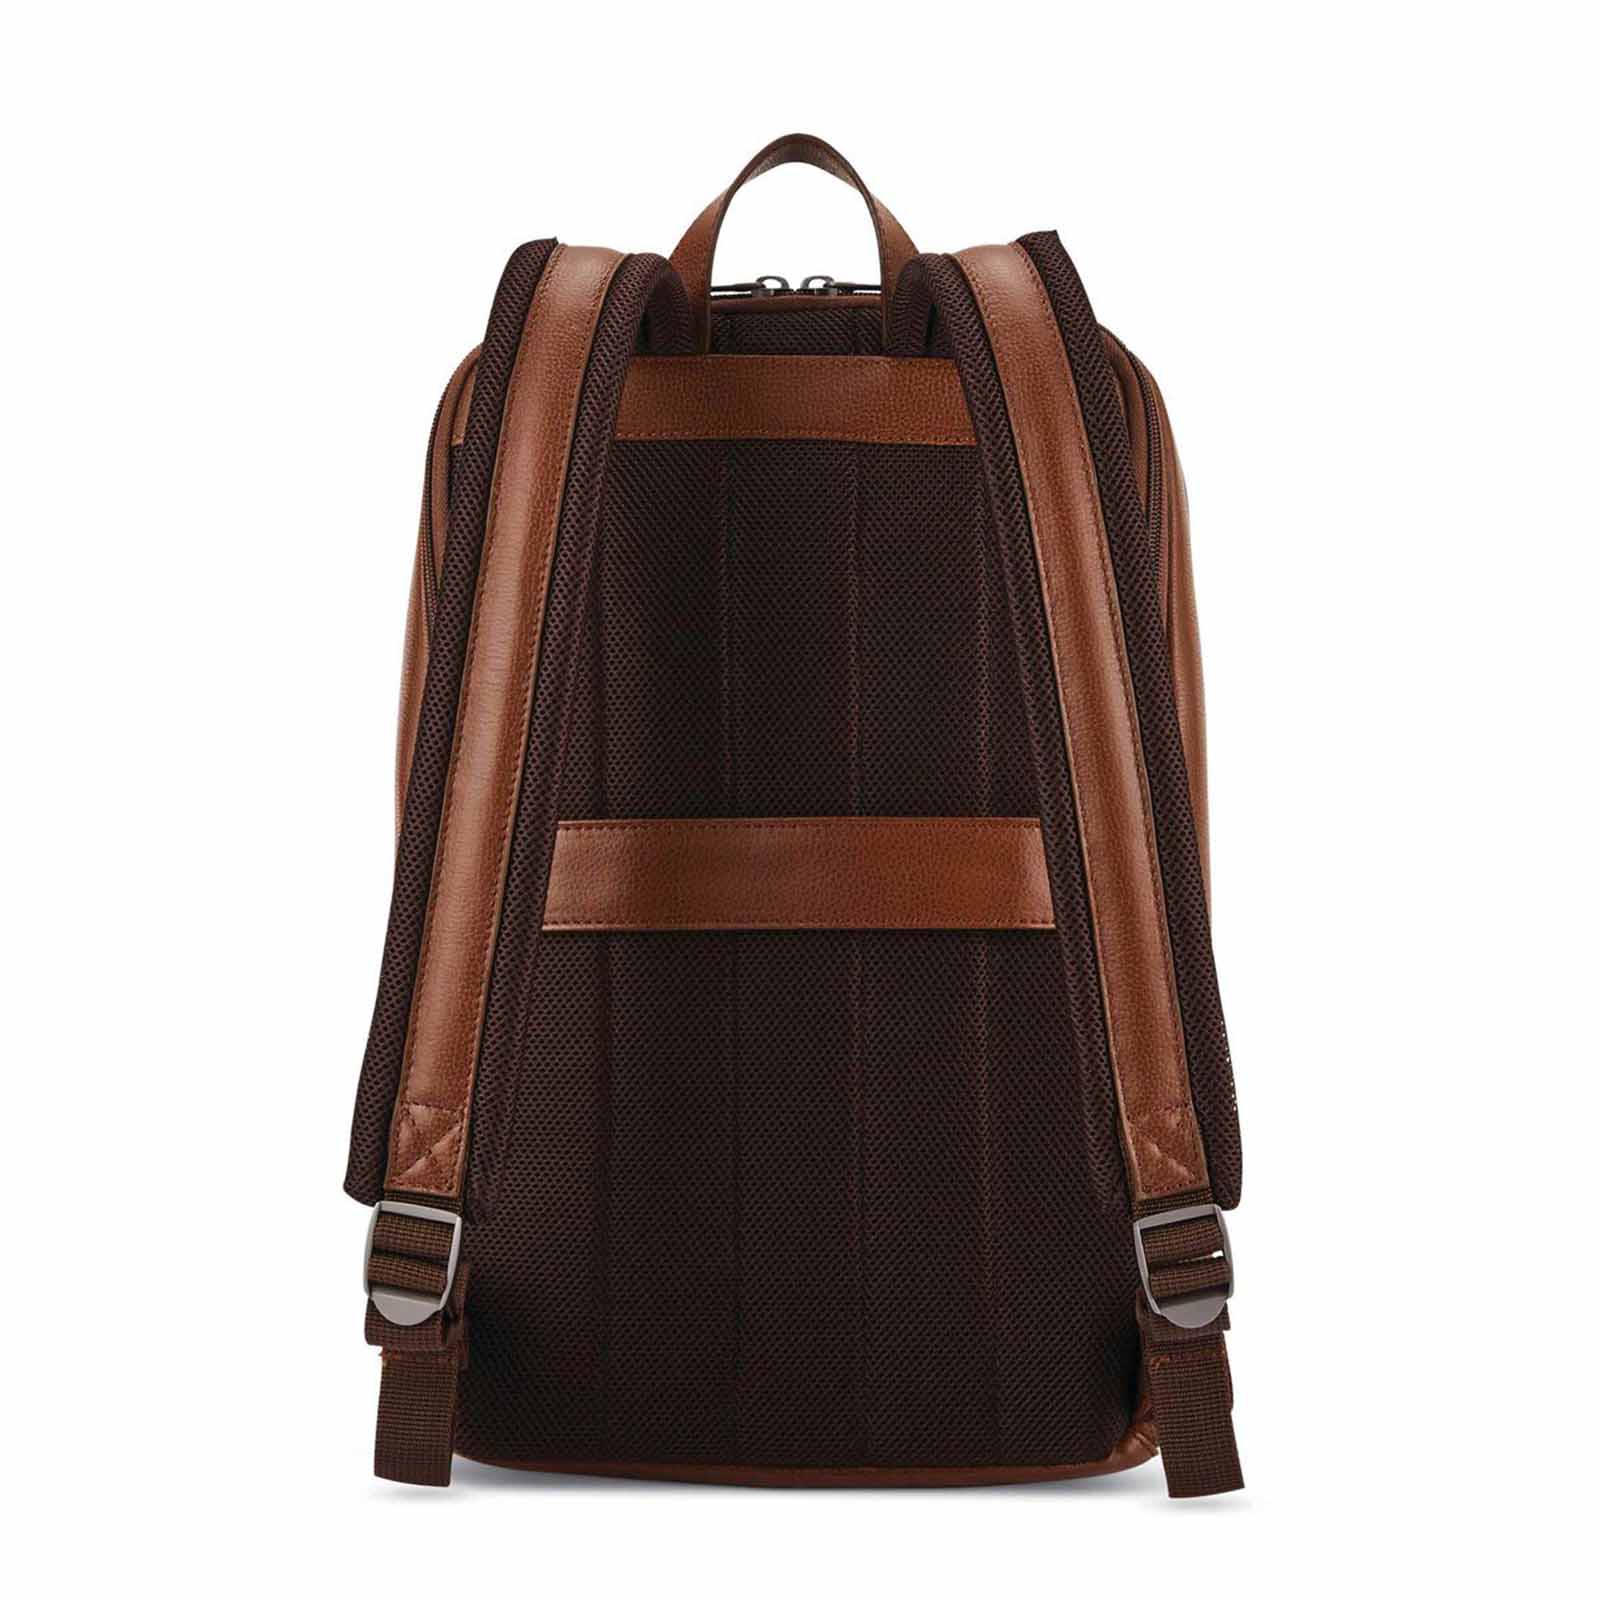 Samsonite-Classic-Leather-14-Inch-Laptop-Backpack-Cognac-Back